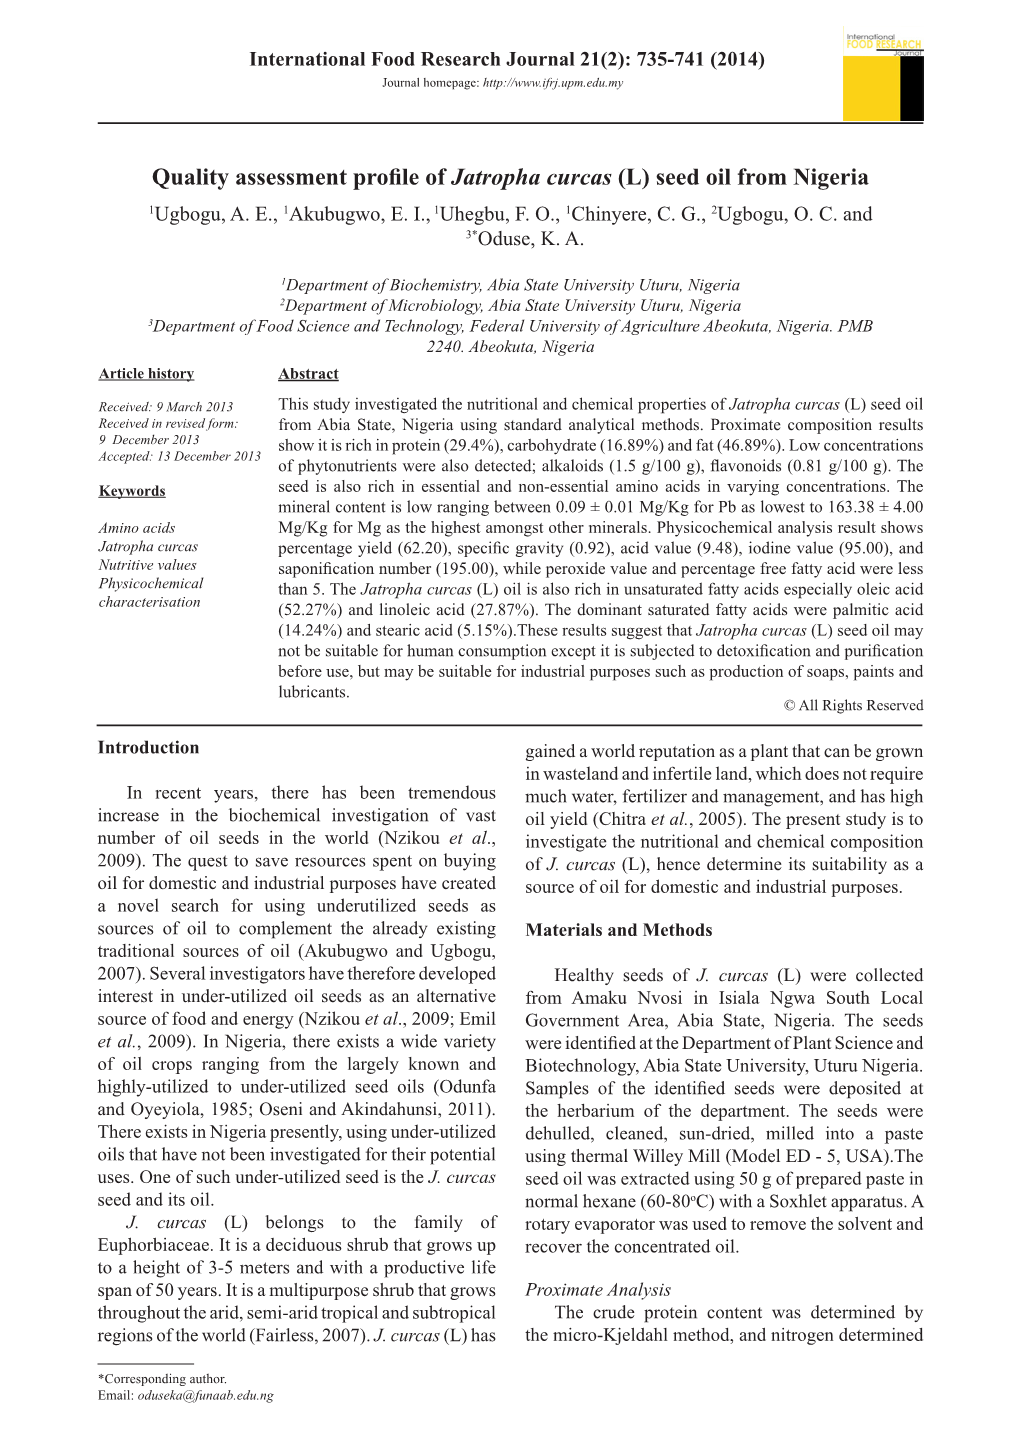 Quality Assessment Profile of Jatropha Curcas